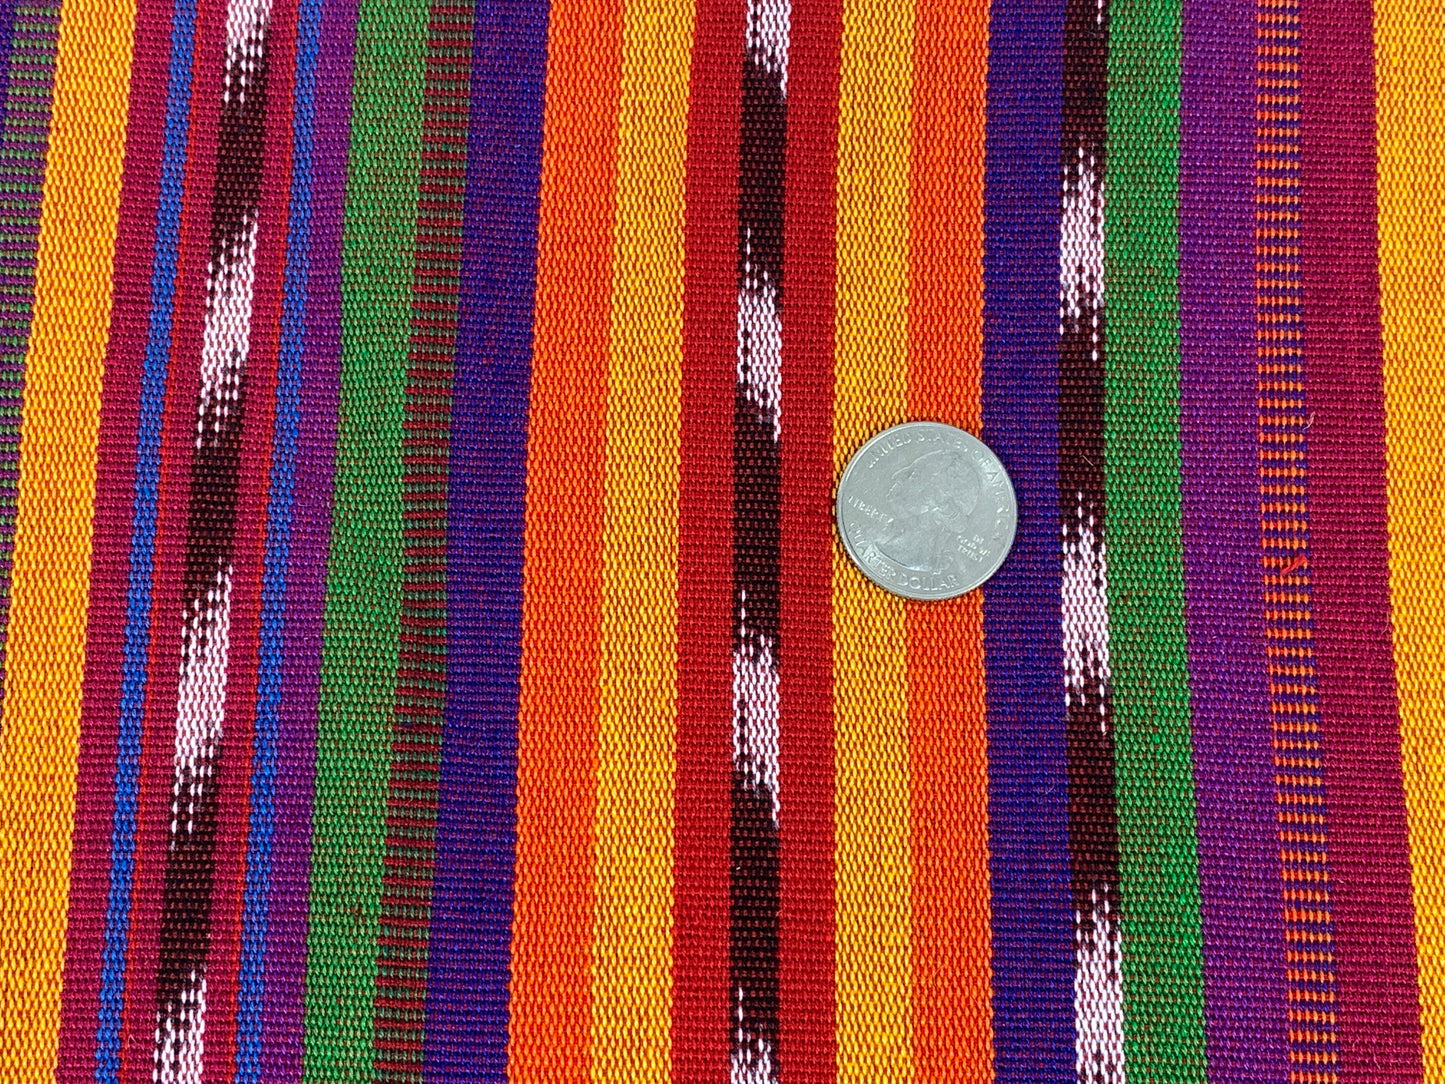 Guatemalan Handwoven Bright Rainbow Ikat